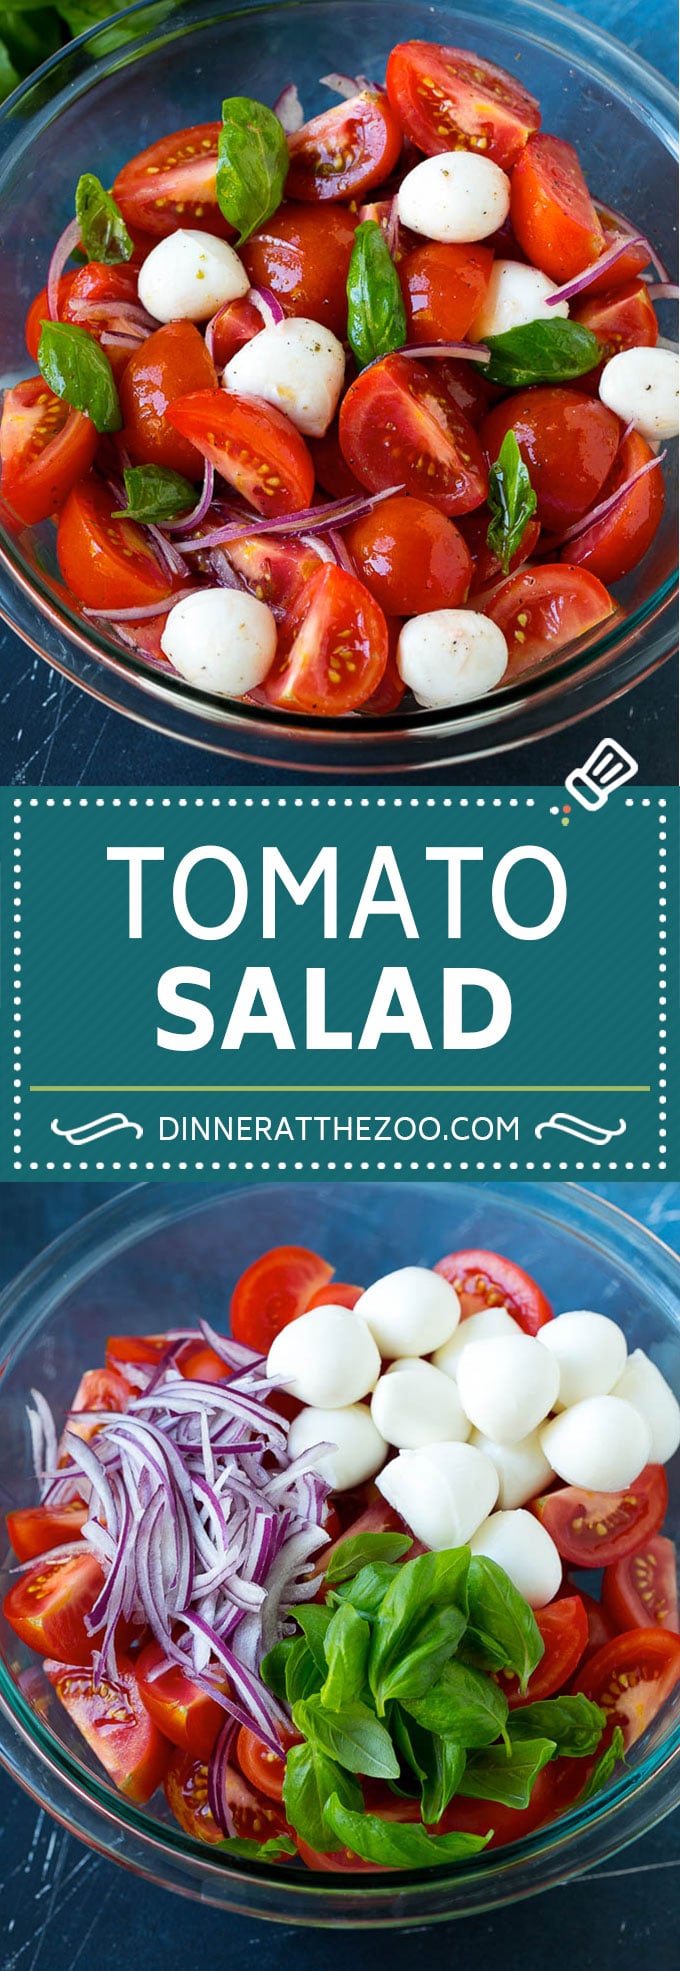 Tomato Salad Recipe | Tomato Basil Salad | Caprese Salad #salad #tomatoes #cheese #summer #dinner #dinneratthezoo